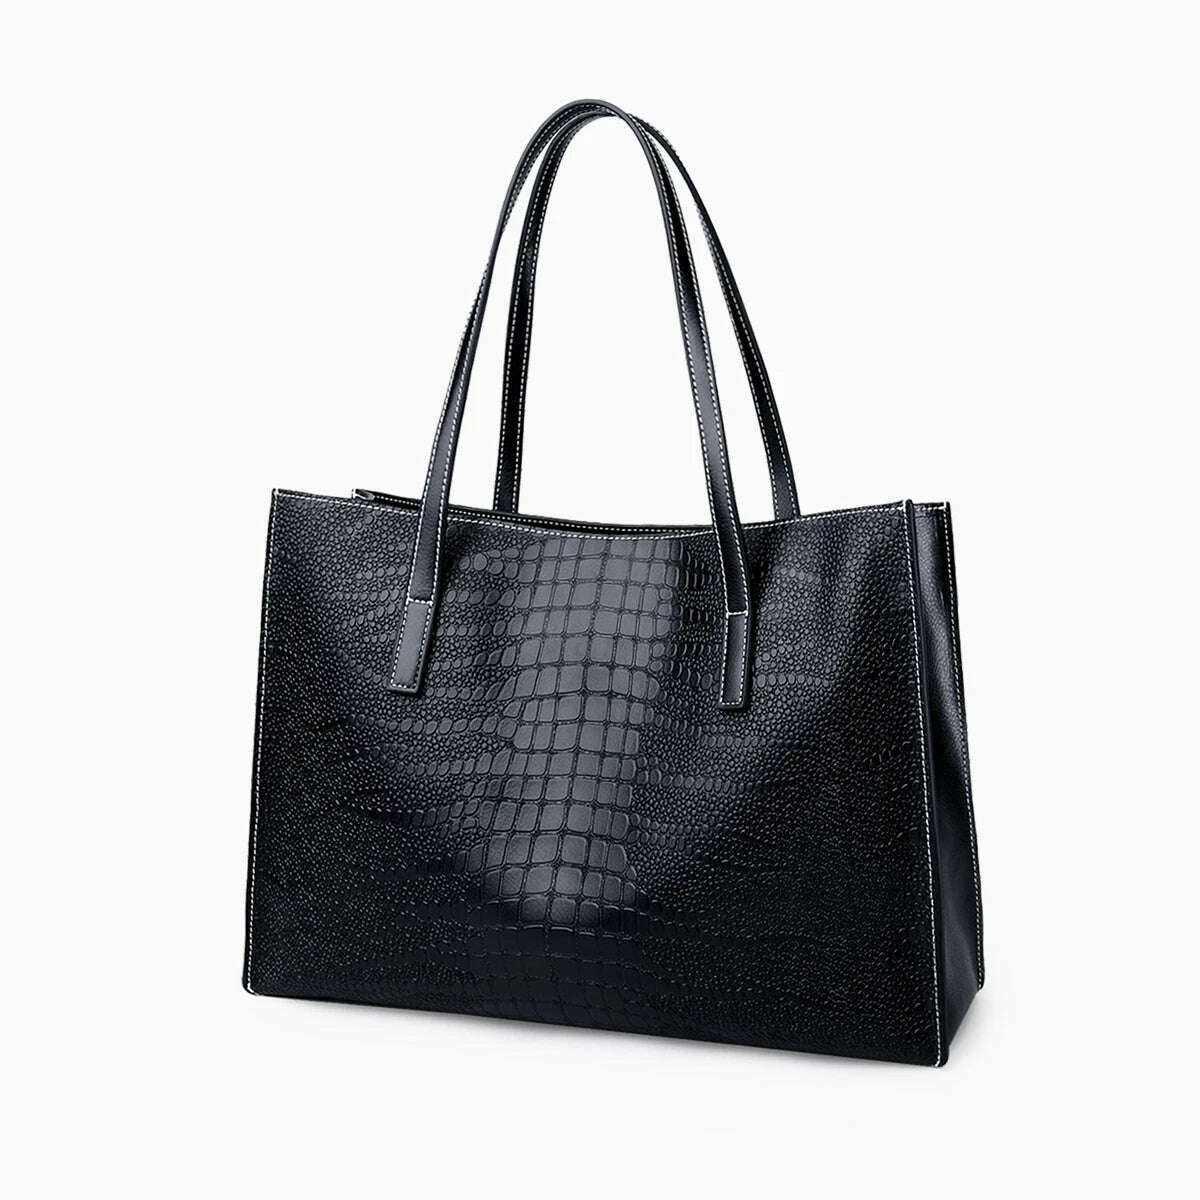 KIMLUD, ZOOLER New Full 100% Genuine Leather Women Shoulder Bag First Layer Skin Tote Original Large Handbag Travel Big Female Business#, KIMLUD Women's Clothes